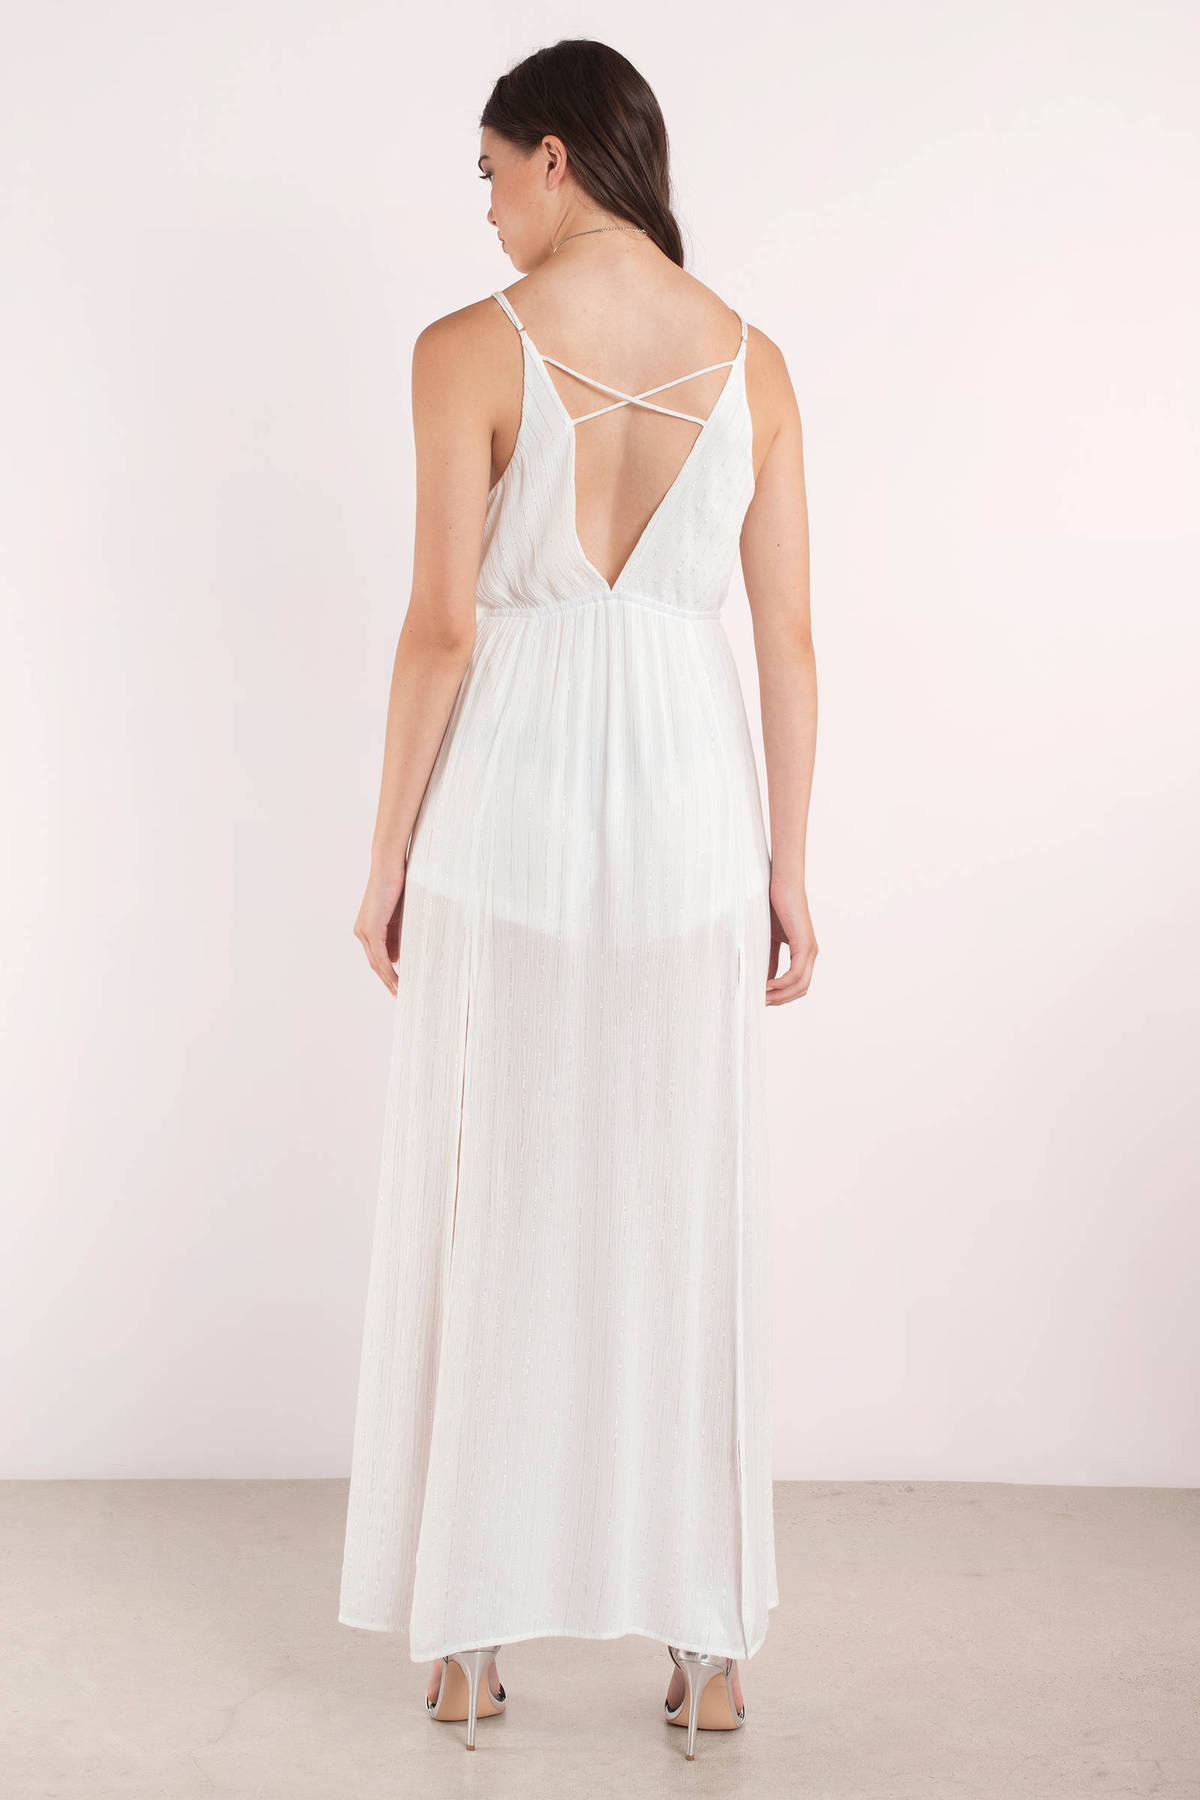 California Sunset Maxi Dress in White - $68 | Tobi US